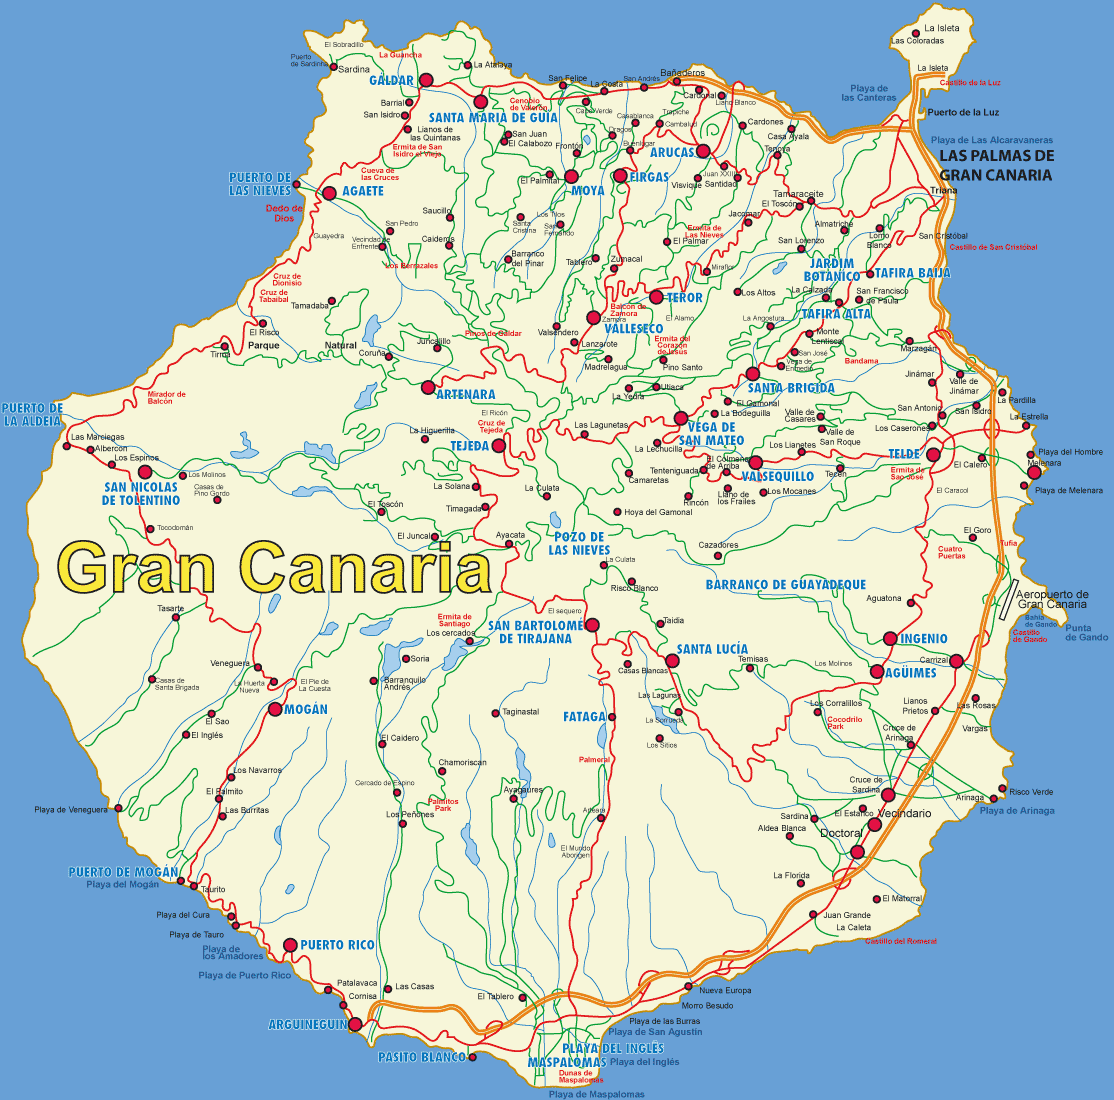 ingles kartta Gran Canaria :: GRAN CANARIA ingles kartta